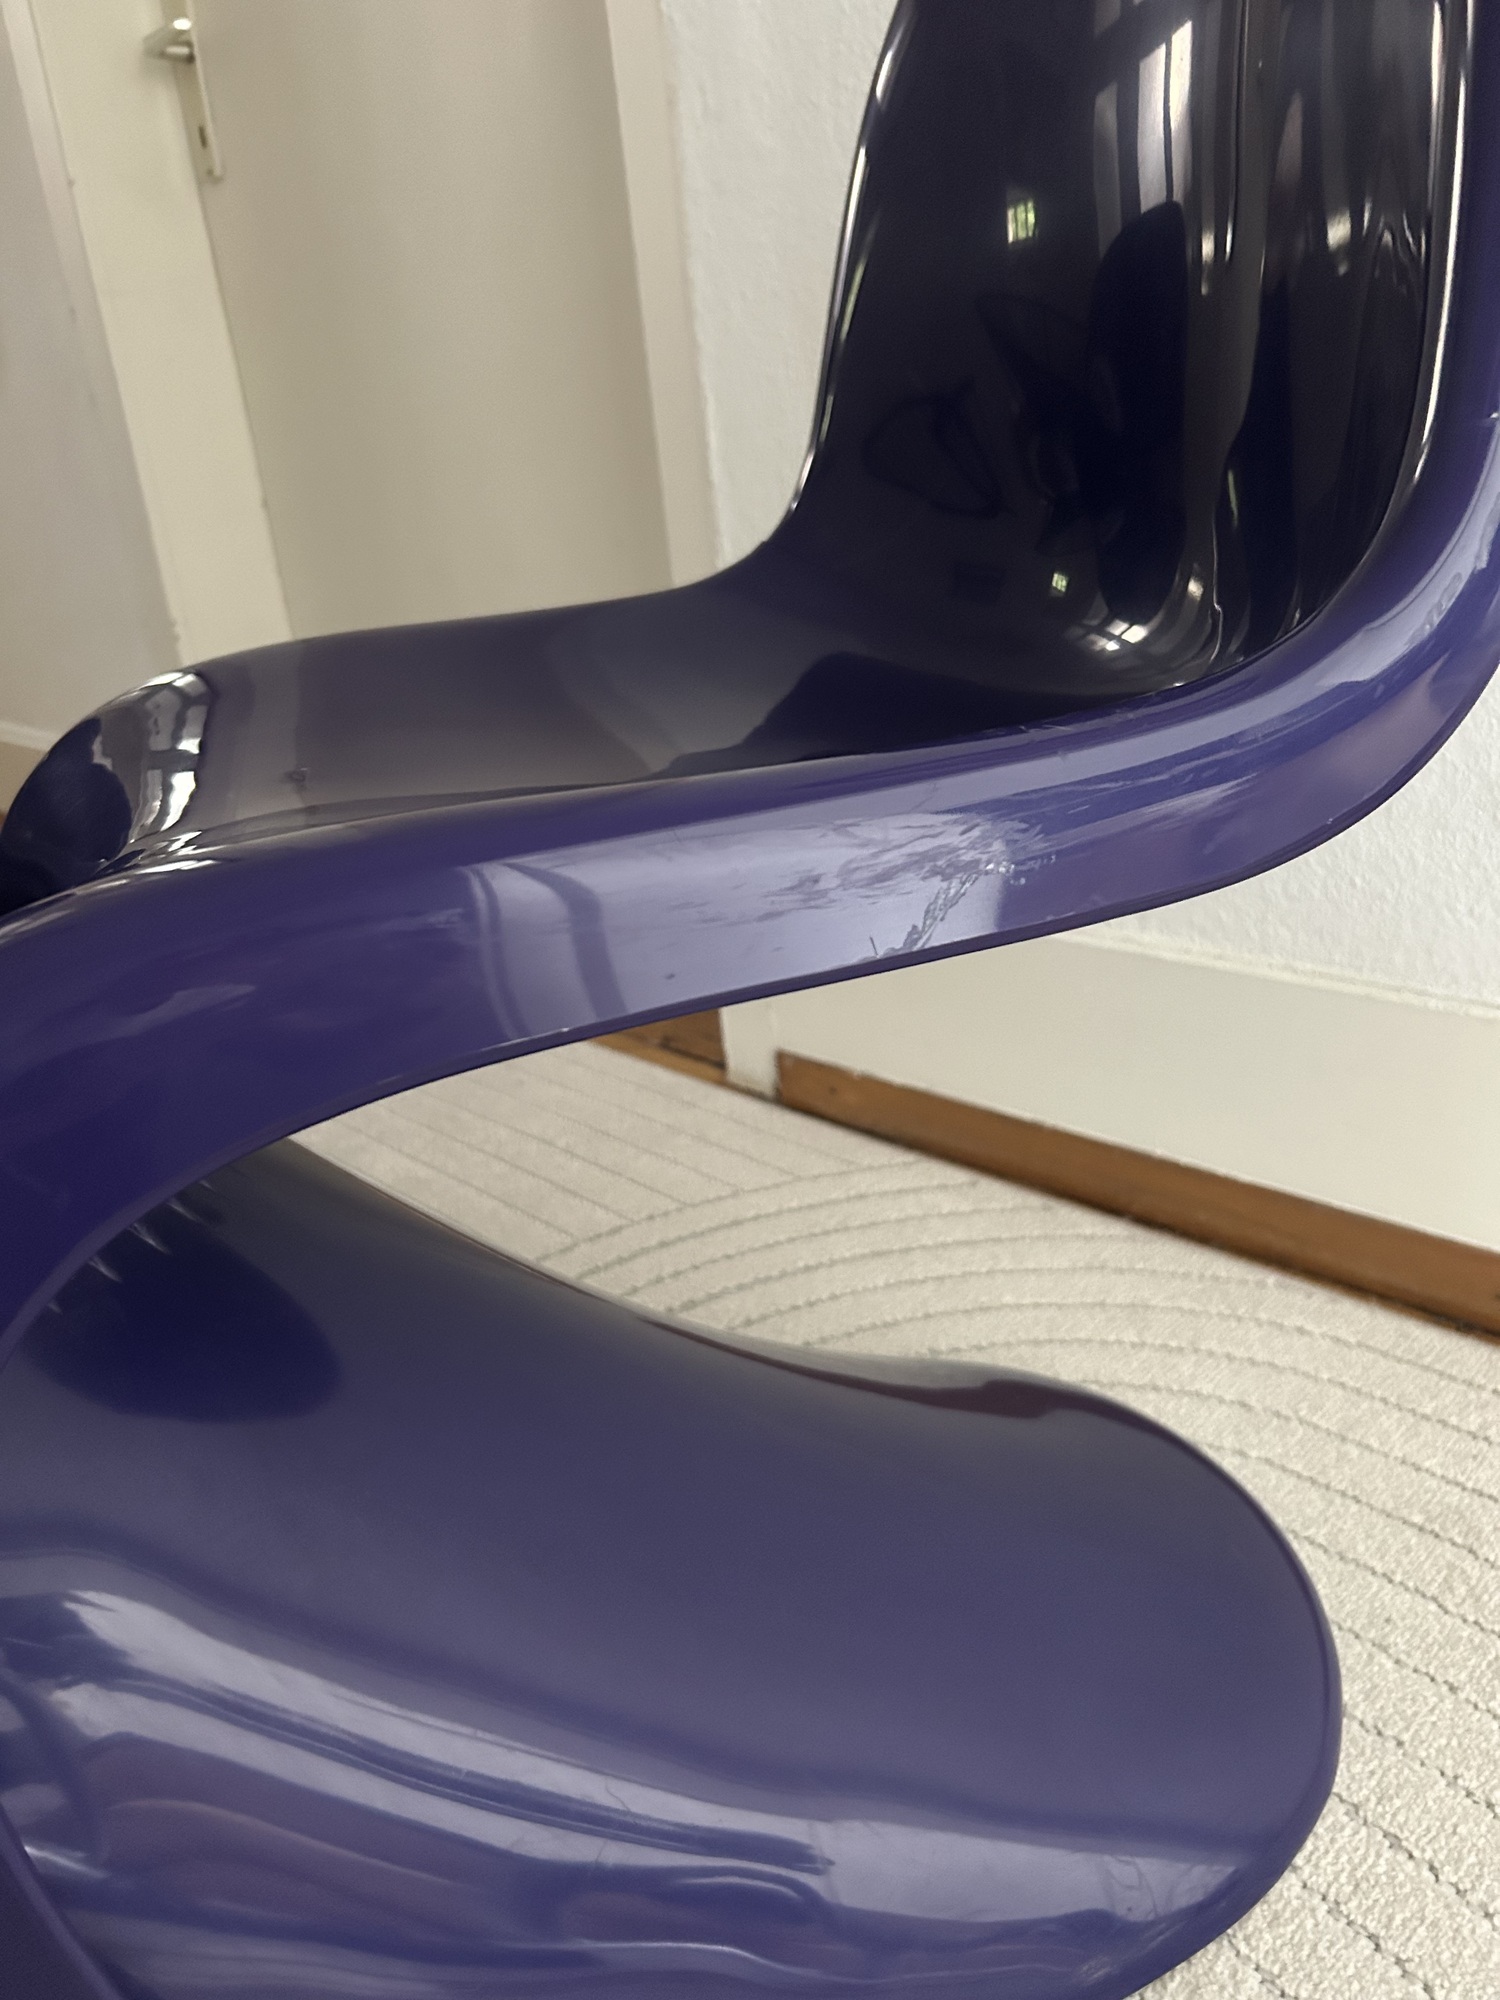 2x Panton Chair Kunststoff Violett 1